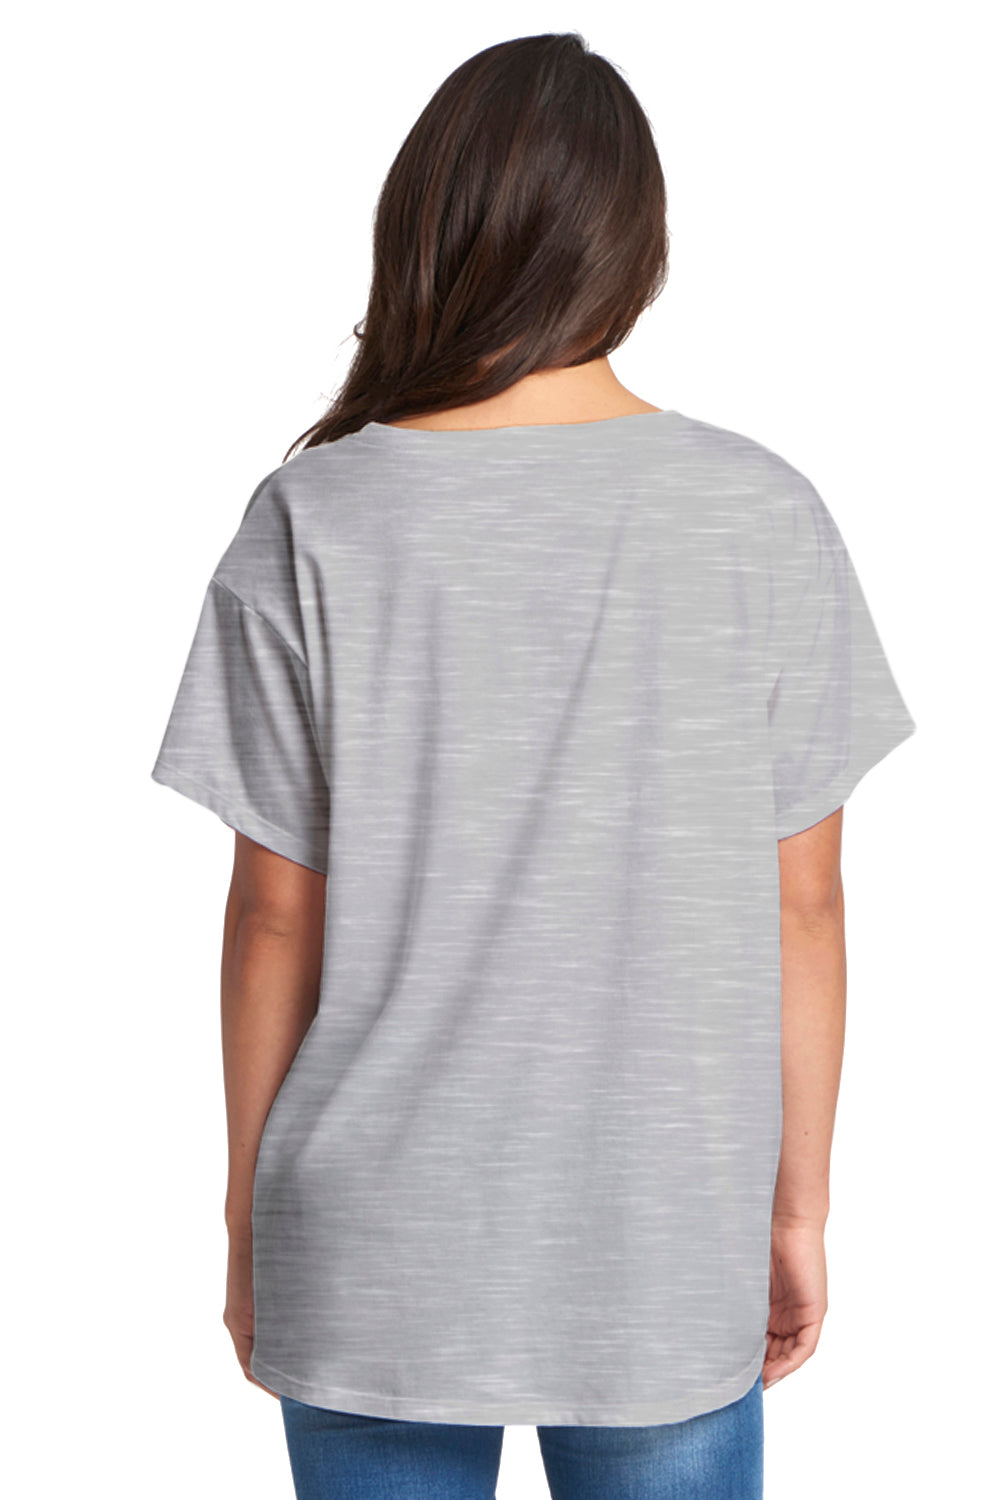 Next Level N1530 Womens Ideal Flow Short Sleeve Crewneck T-Shirt Heather Grey Back